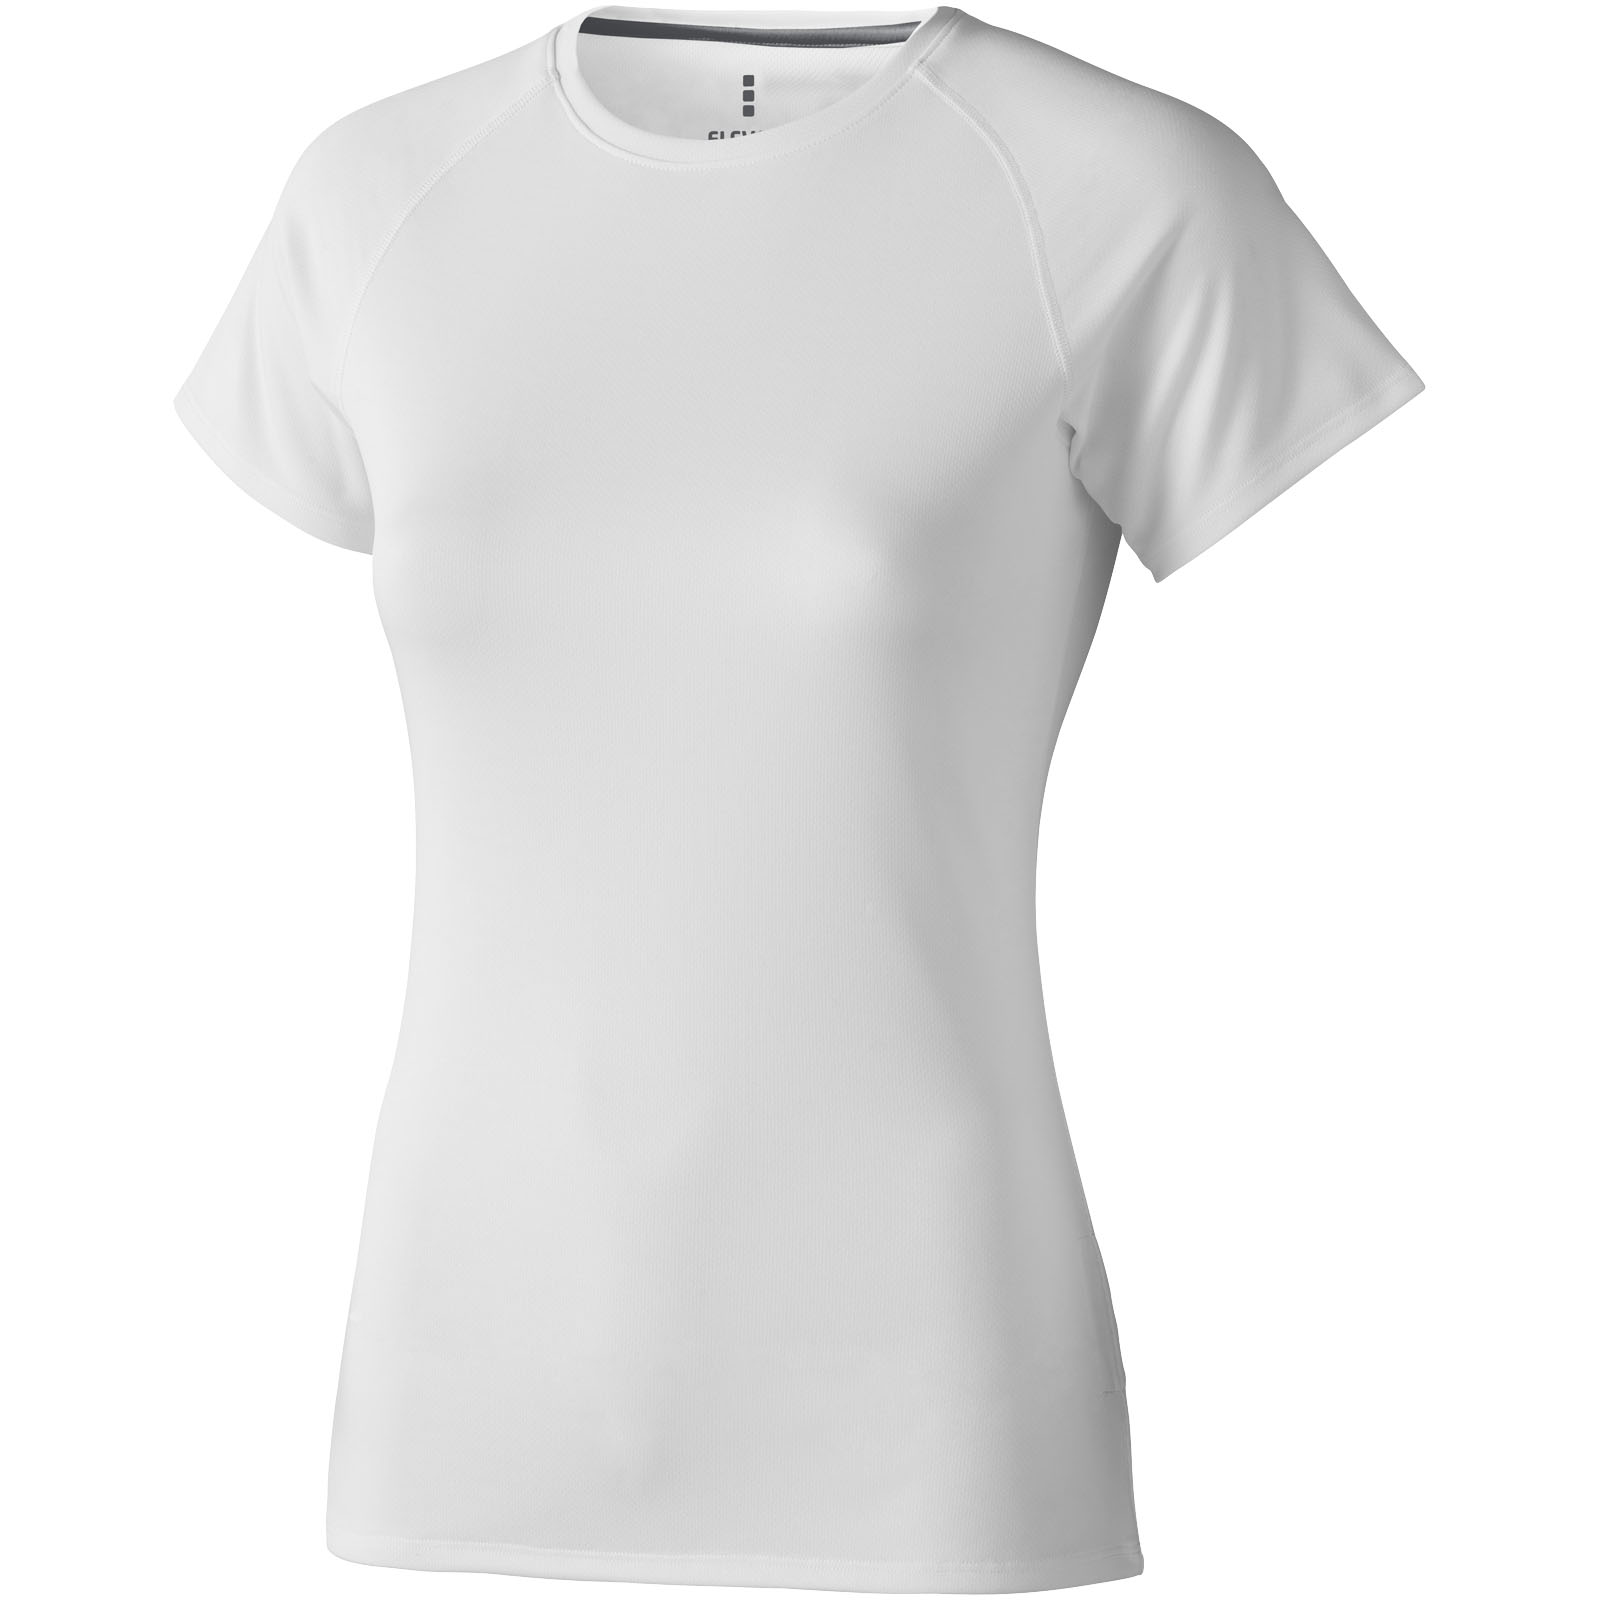 Advertising T-shirts - Niagara short sleeve women's cool fit t-shirt